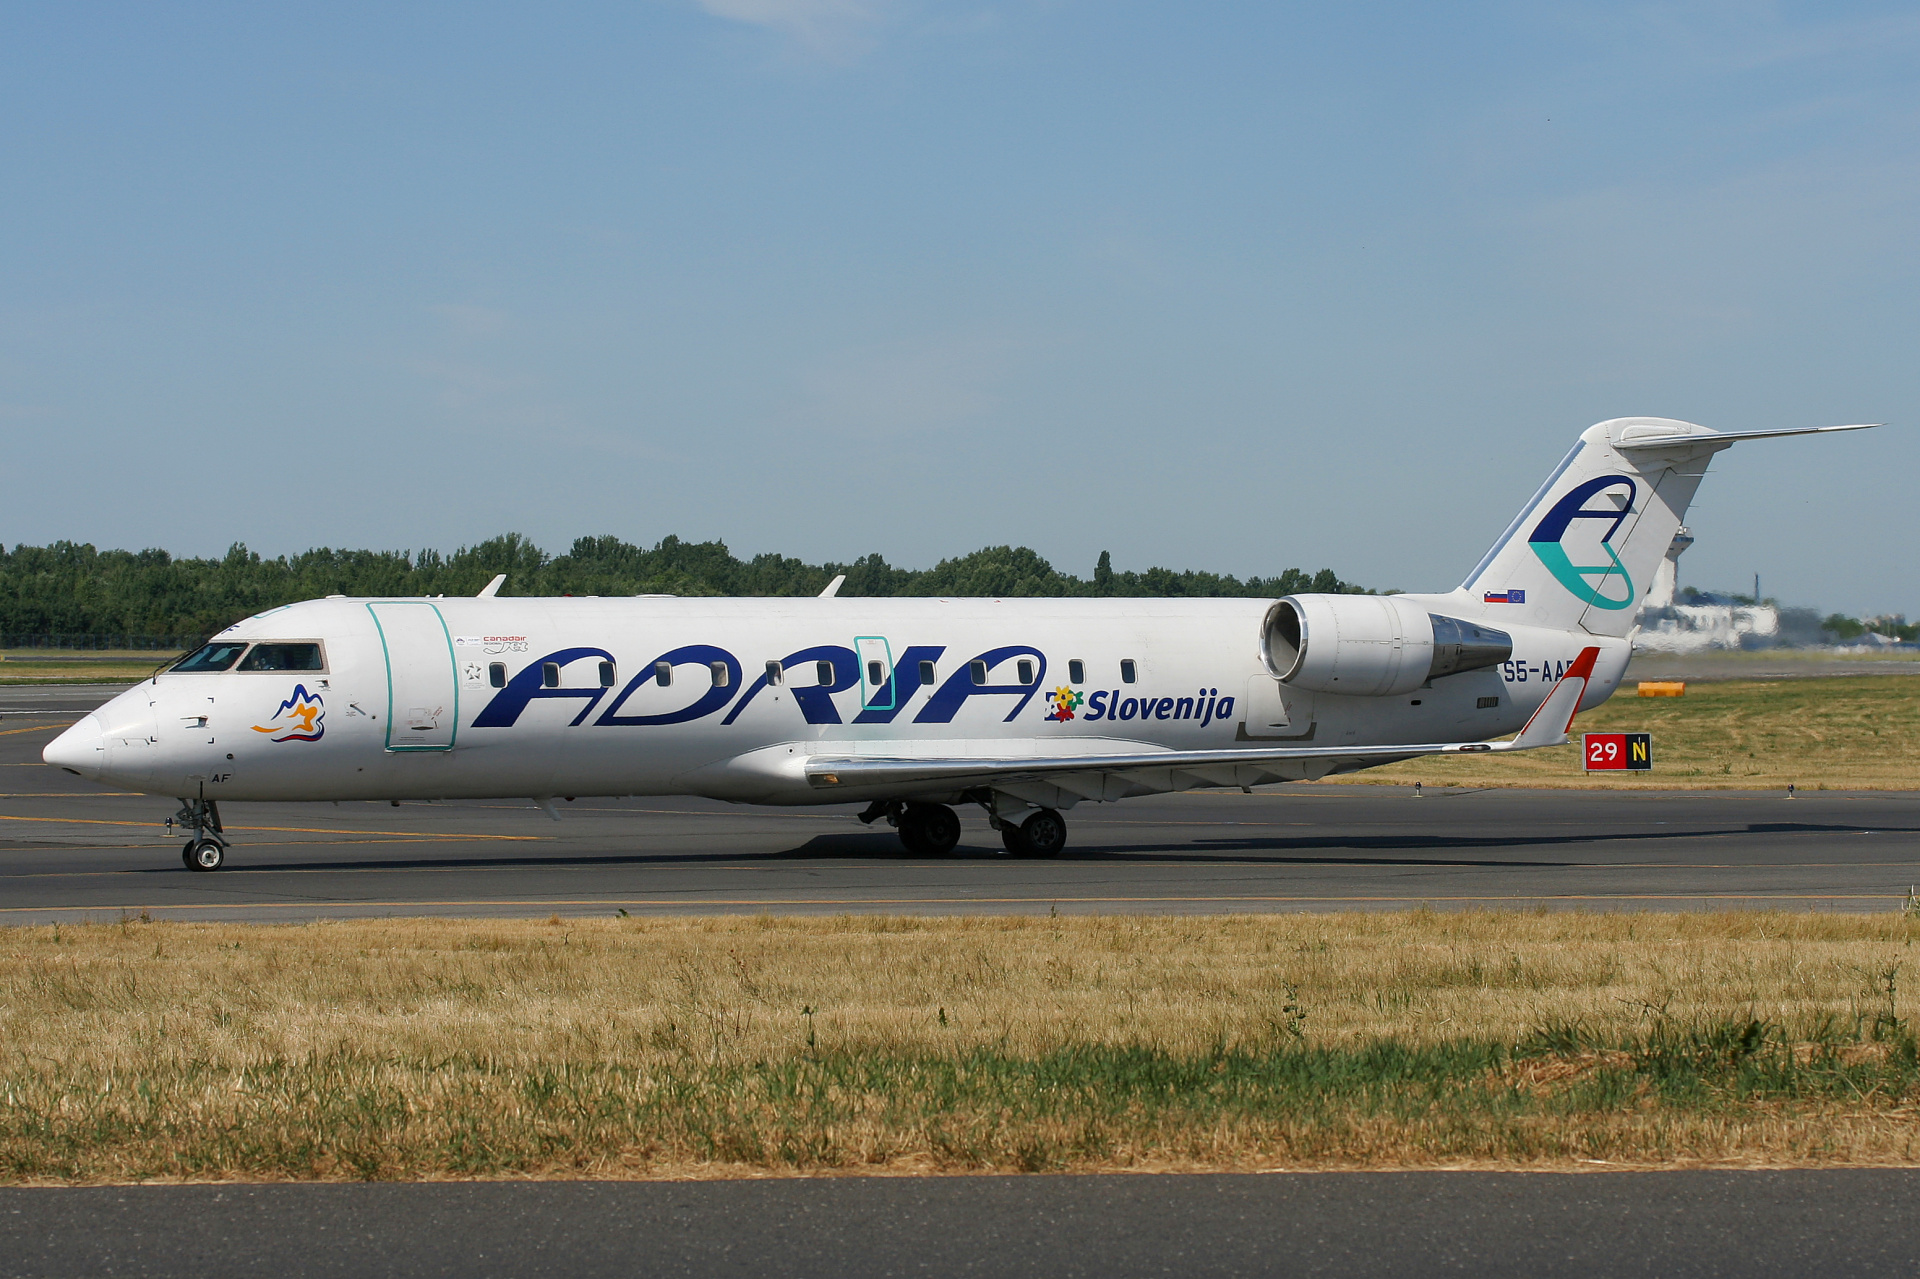 S5-AAF (Slovenia livery) (Aircraft » EPWA Spotting » Bombardier CL-600 Regional Jet » CRJ-200 » Adria Airways)